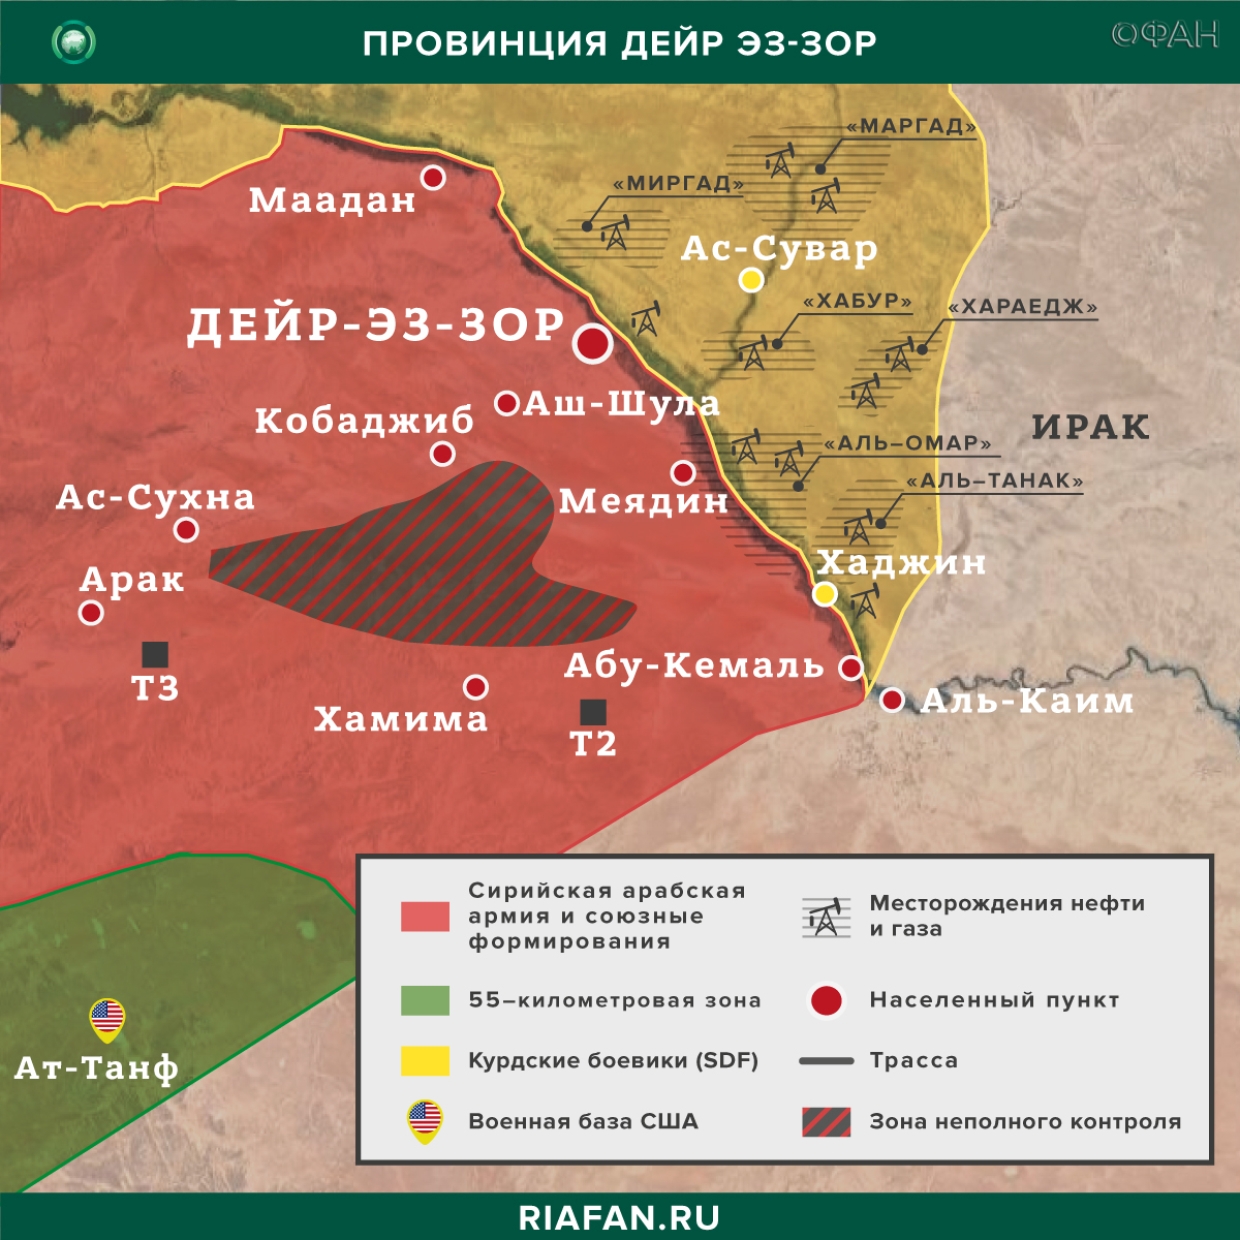 叙利亚新闻 29 二月 07.00: вооруженный конфликт между жителями и SDF в Дейр-эз-Зоре, боевики ударили по Джурину в Хаме